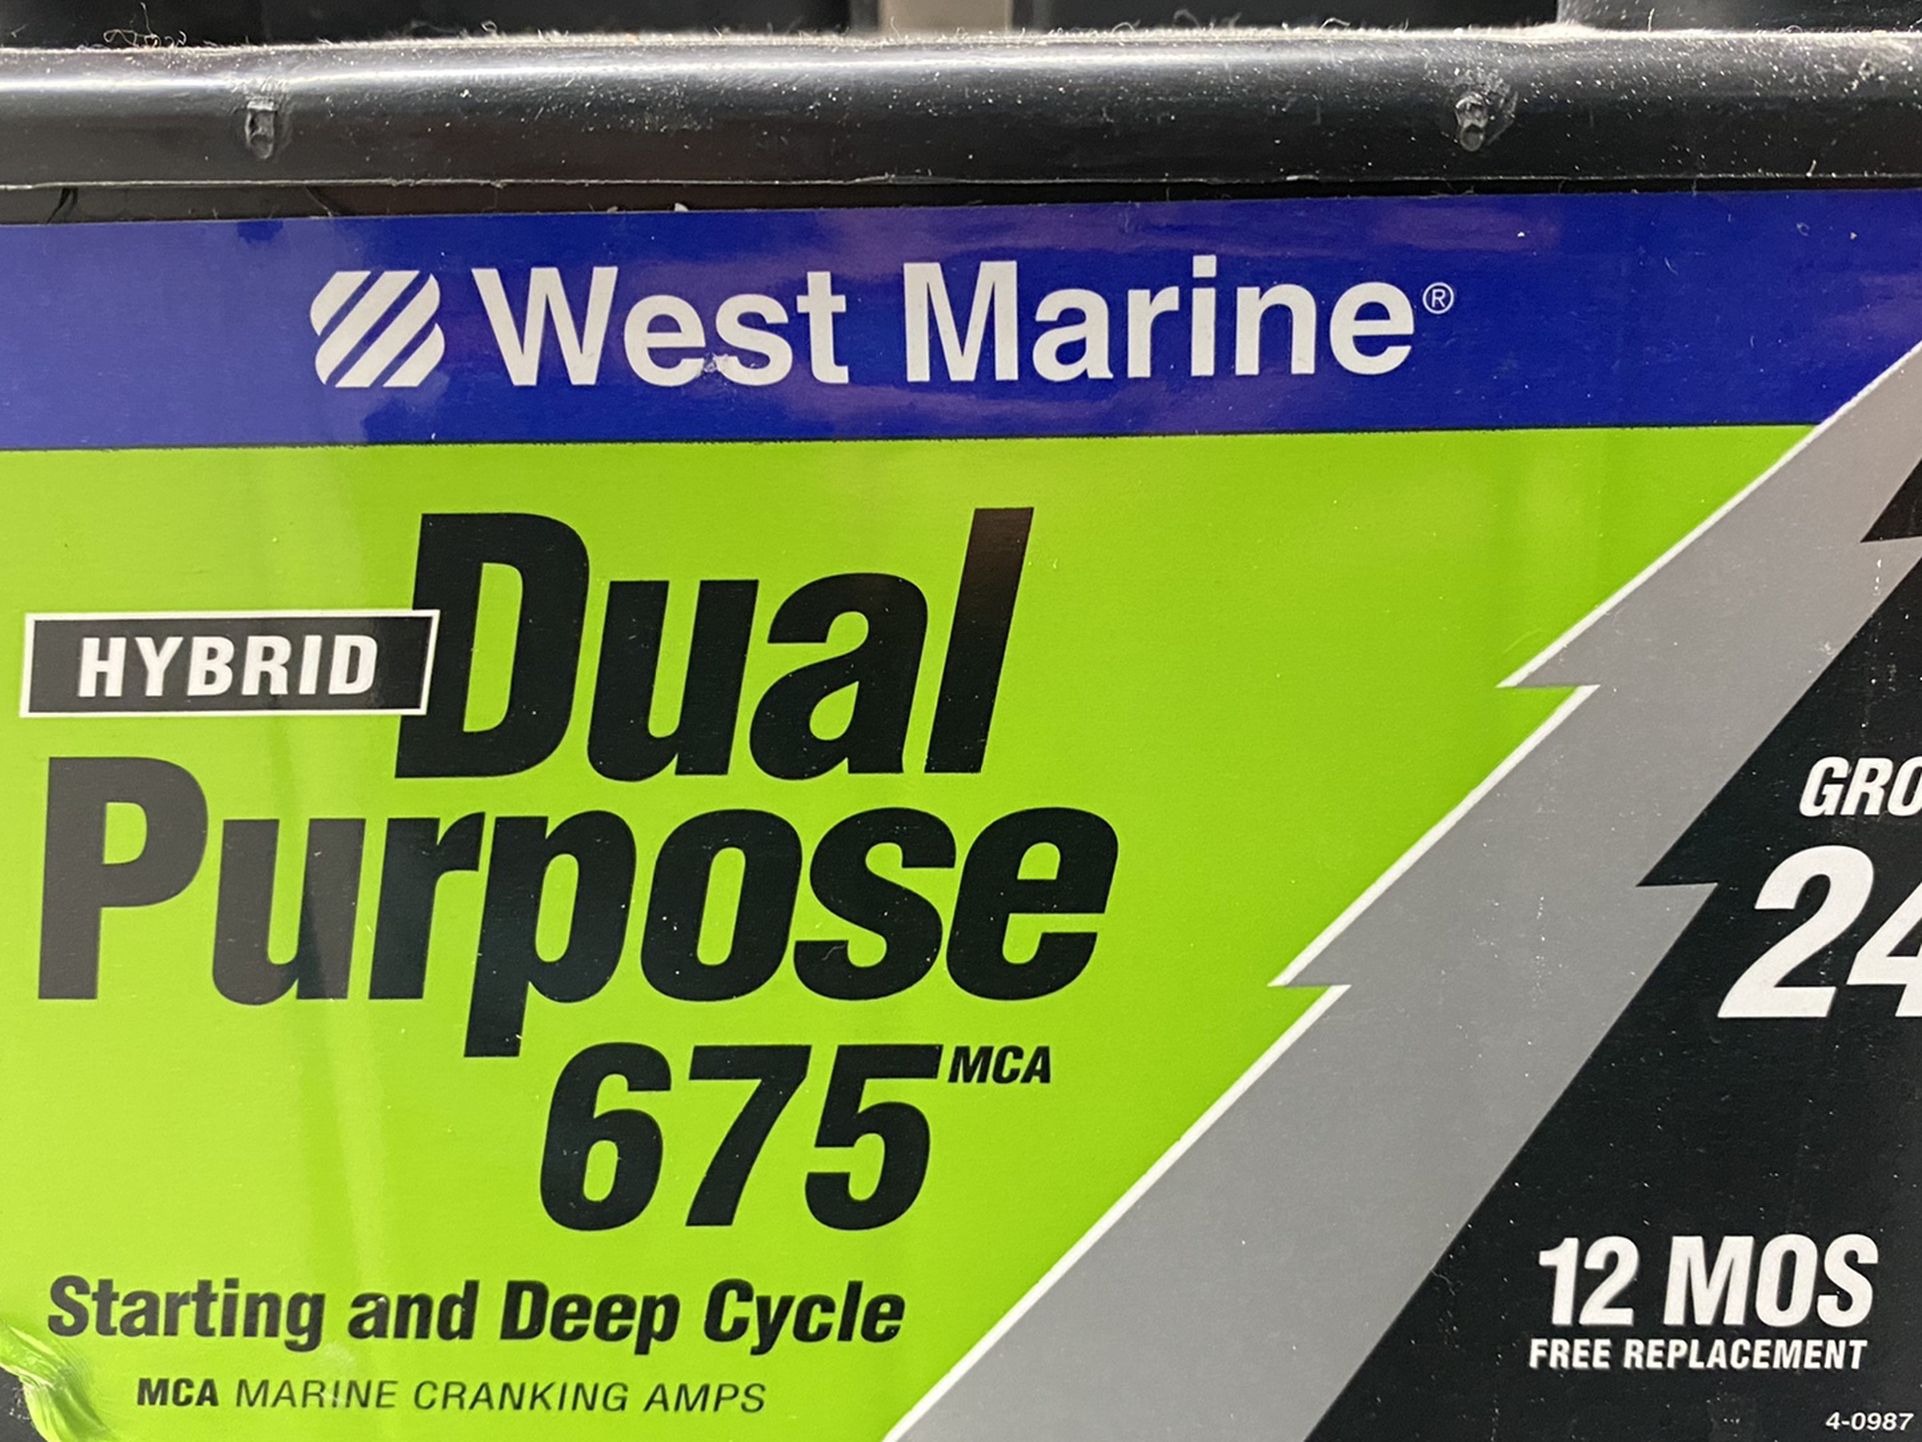 2019 mfg date West Marine Hybrid Dual Purpose 675